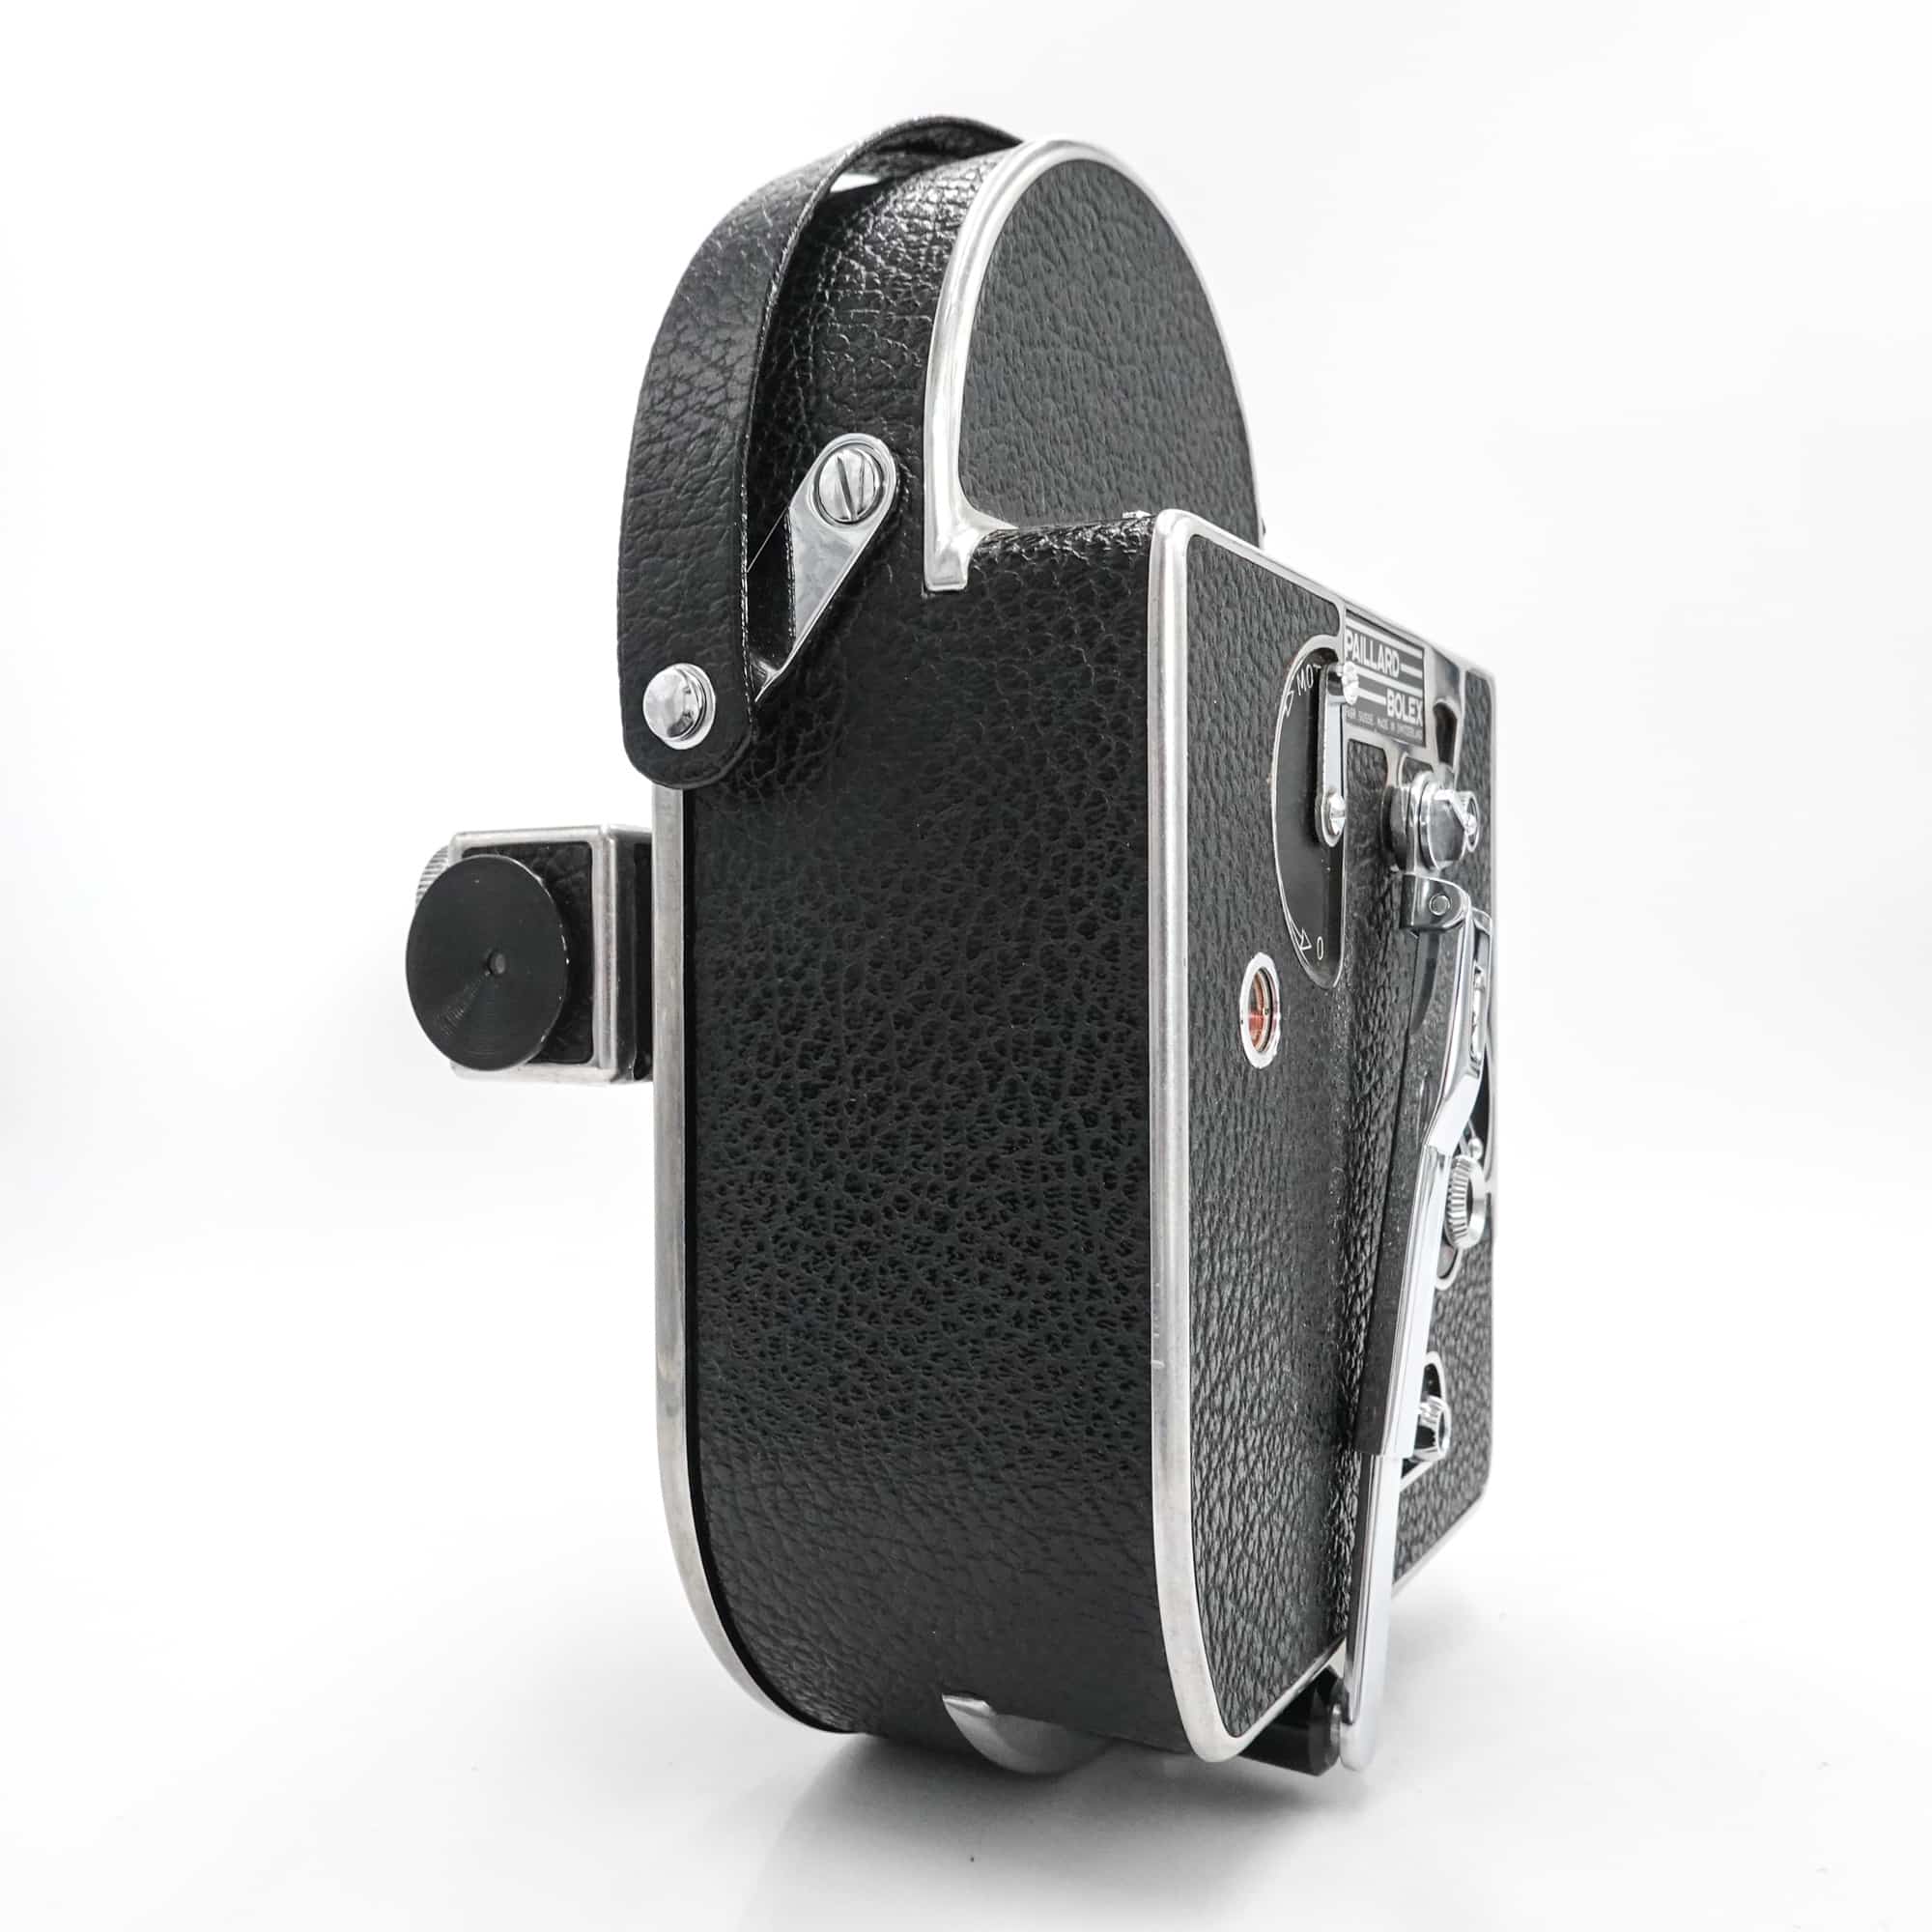 Bolex Paillard H16m Non-Reflex 16mm Camera